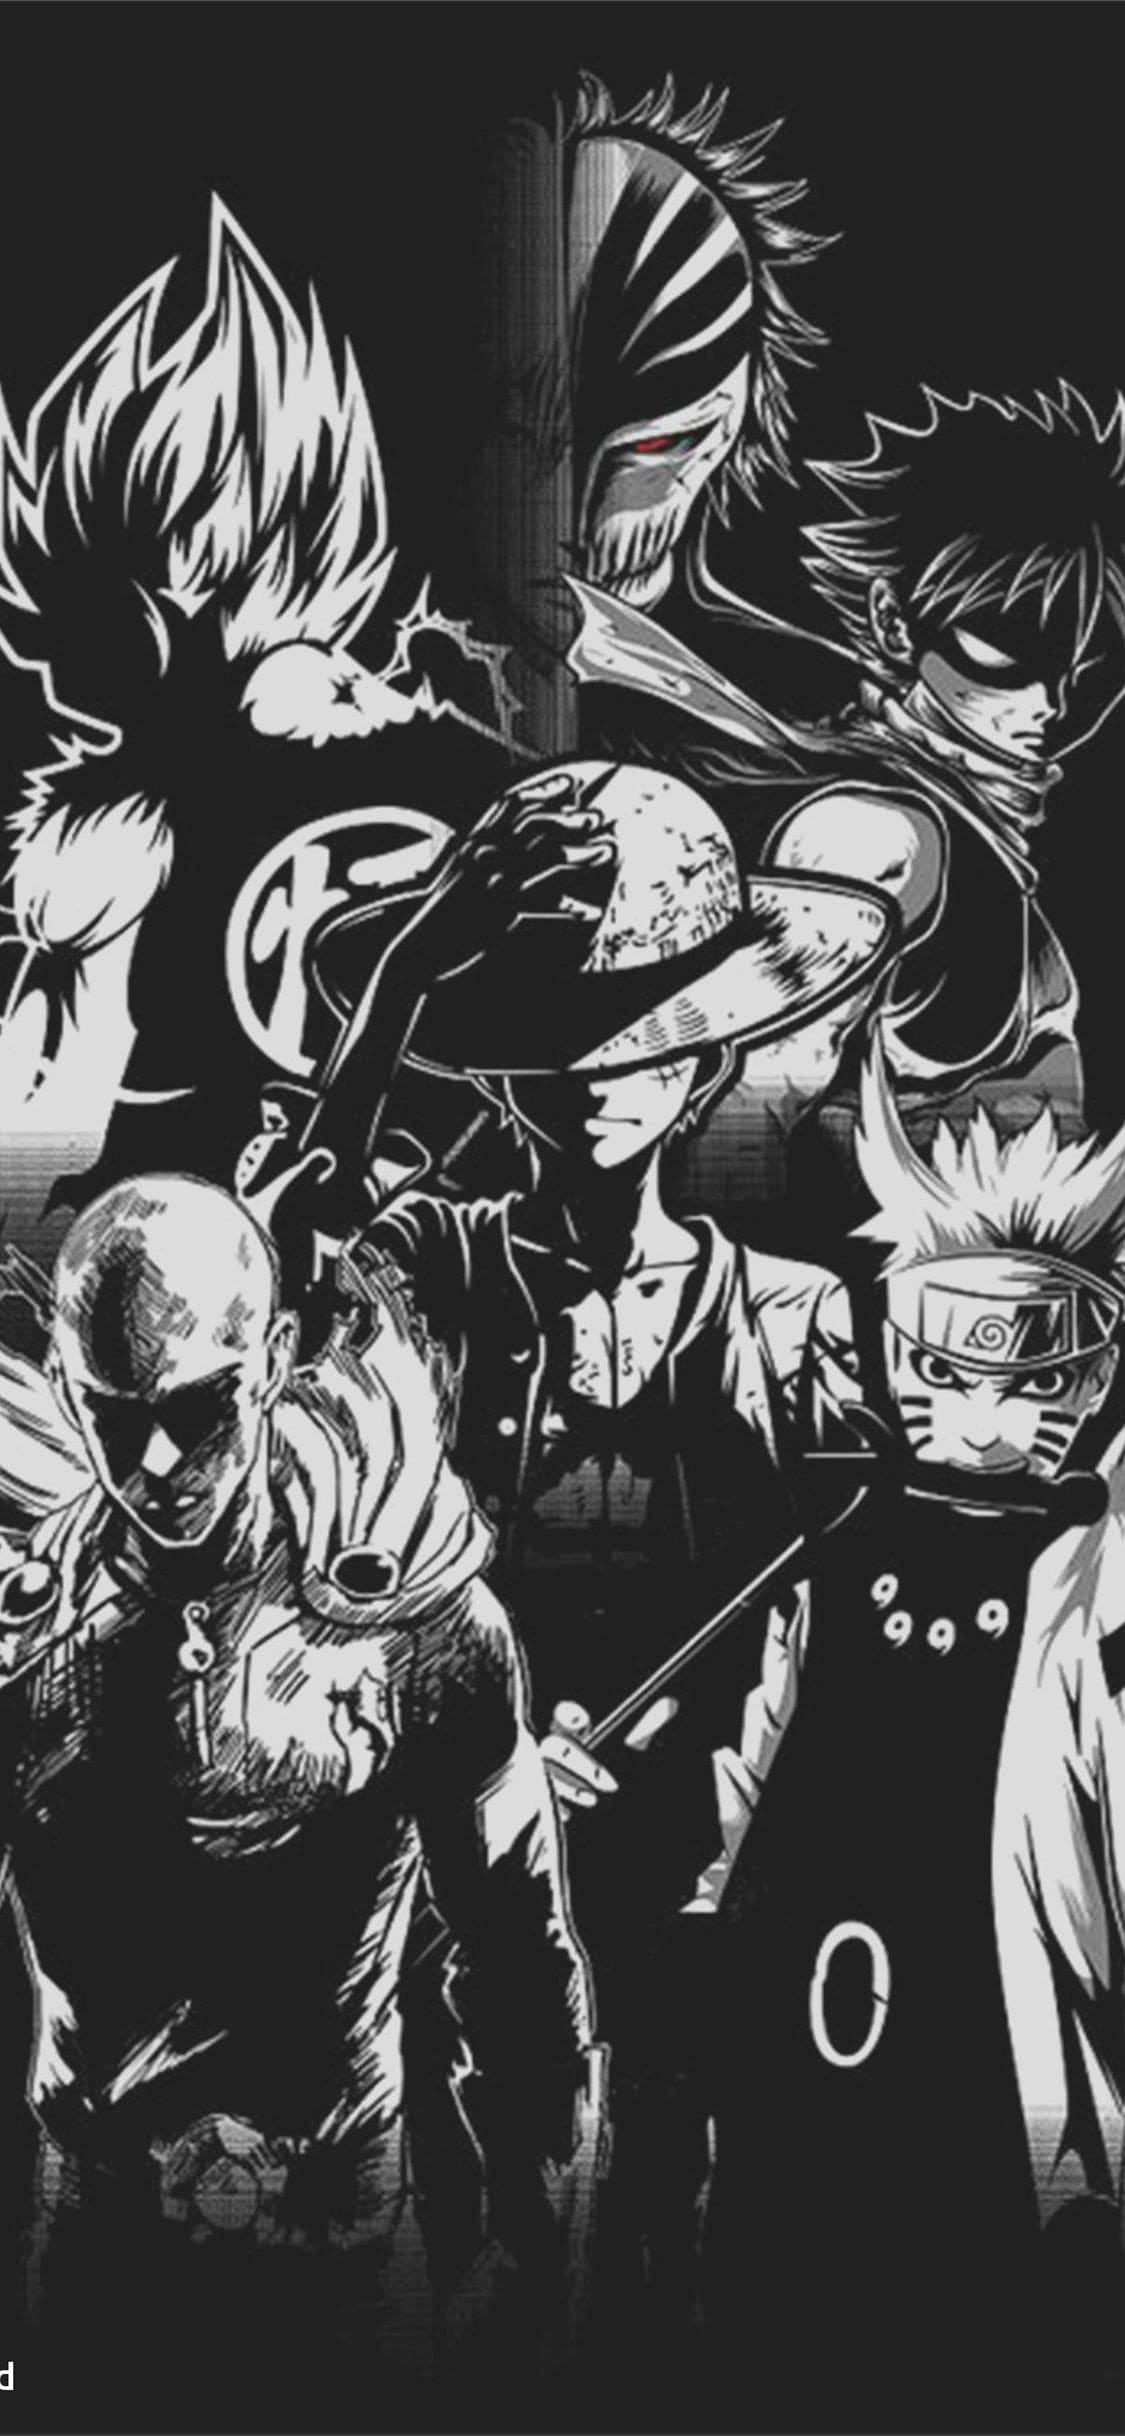 Black One Piece on Dog 4k wallpaper, Best iPhone Wallpaper and iPhone background, WallpaperUpdate, Best iPhone Wallpaper and iPhone background